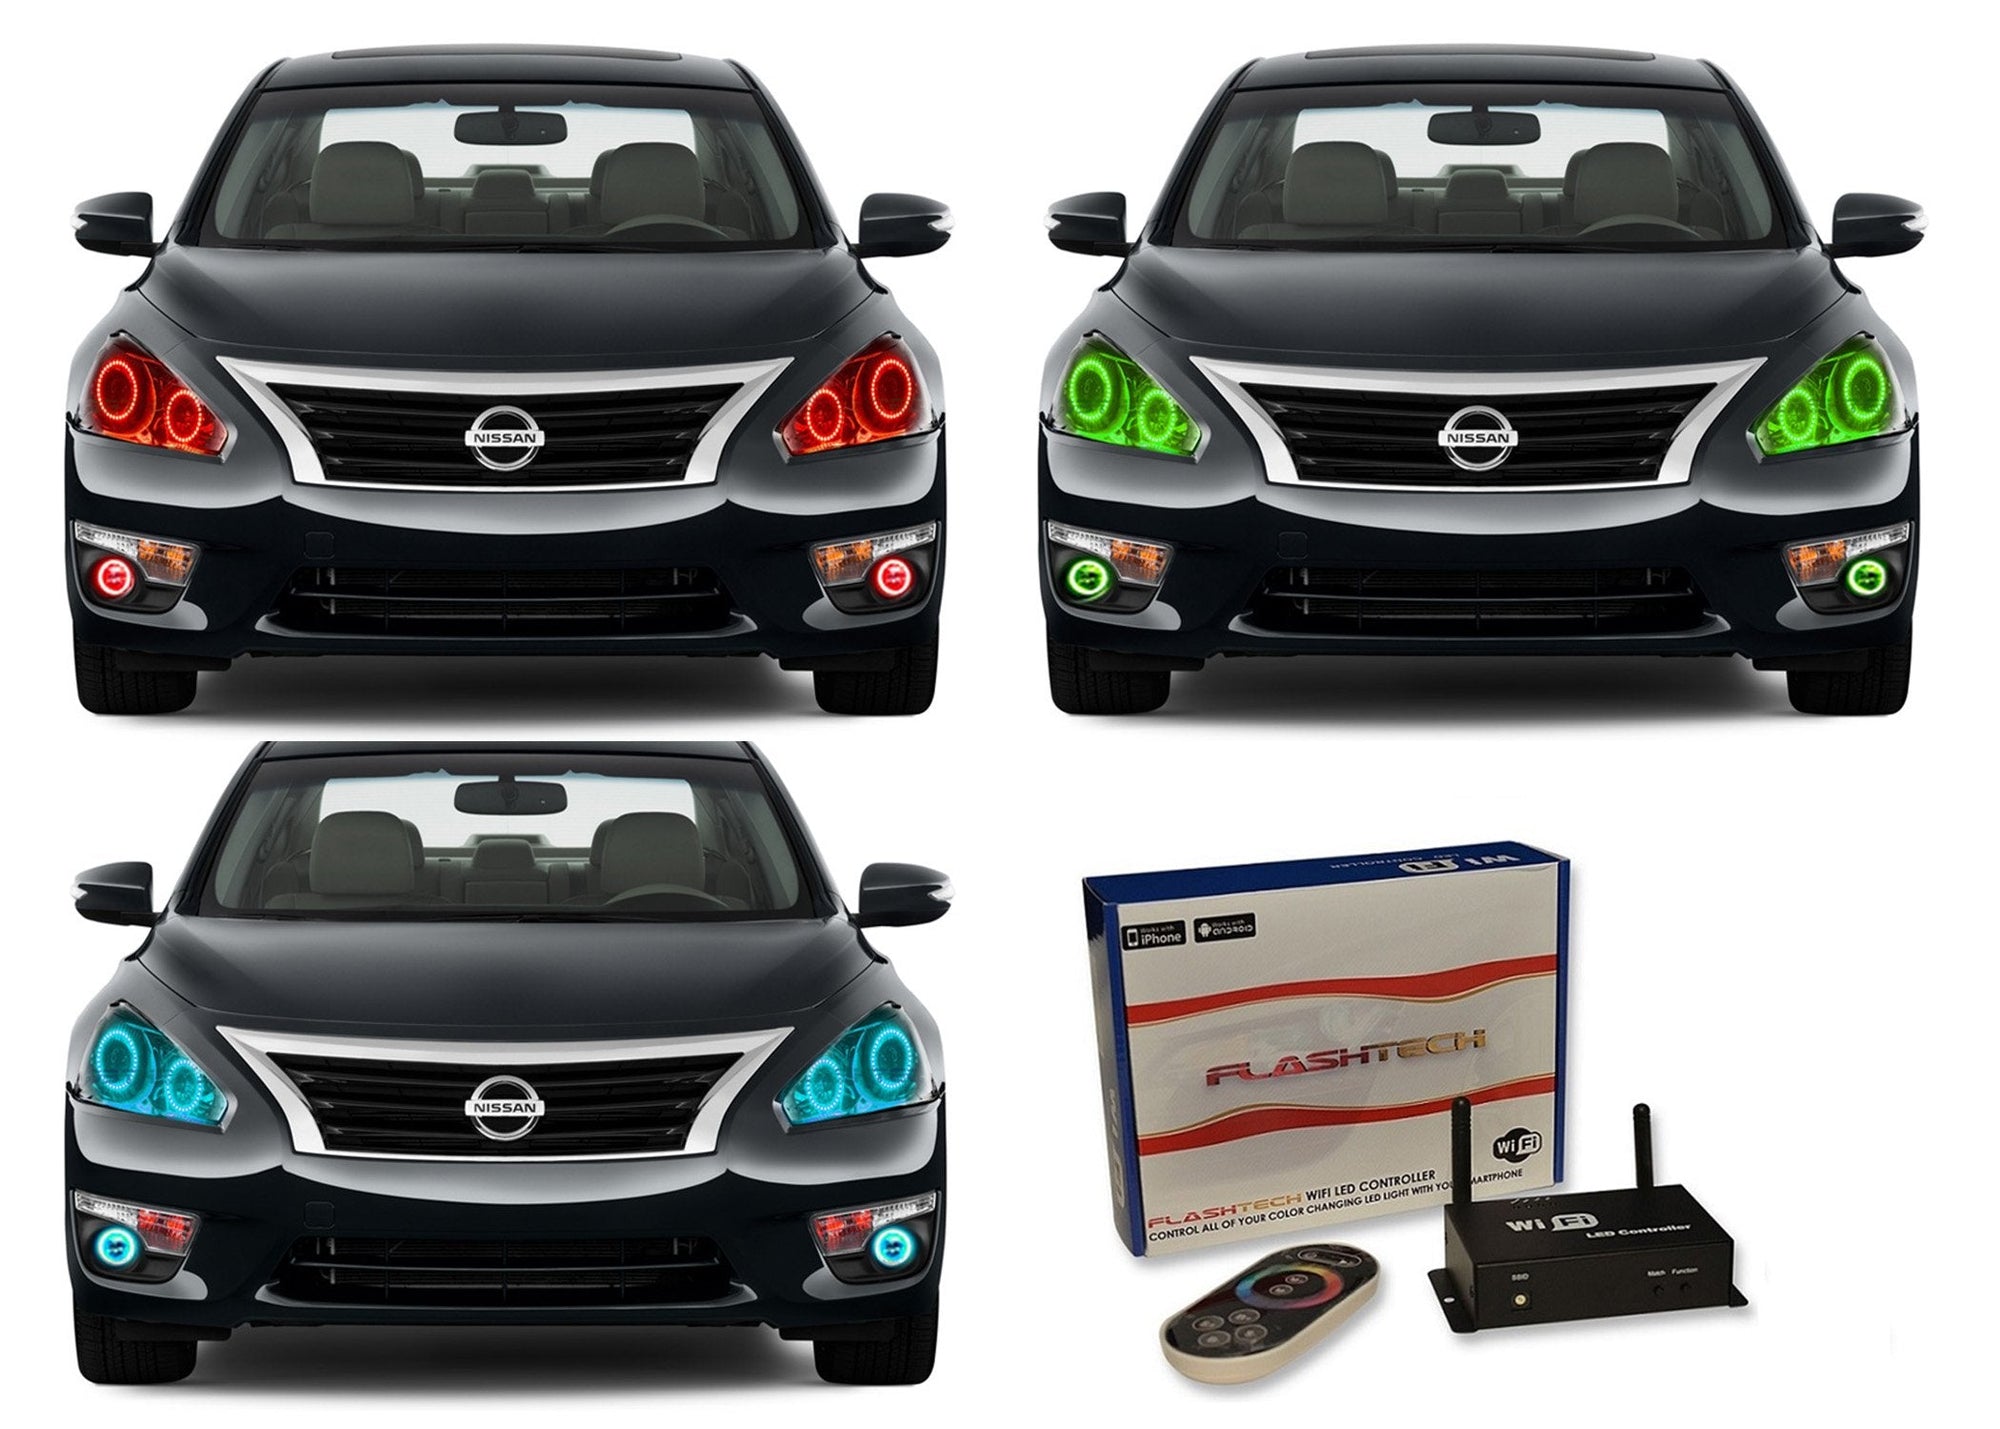 Nissan-Altima-2013, 2014, 2015-LED-Halo-Headlights and Fog Lights-RGB-WiFi Remote-NI-ALS1315-V3HFWI